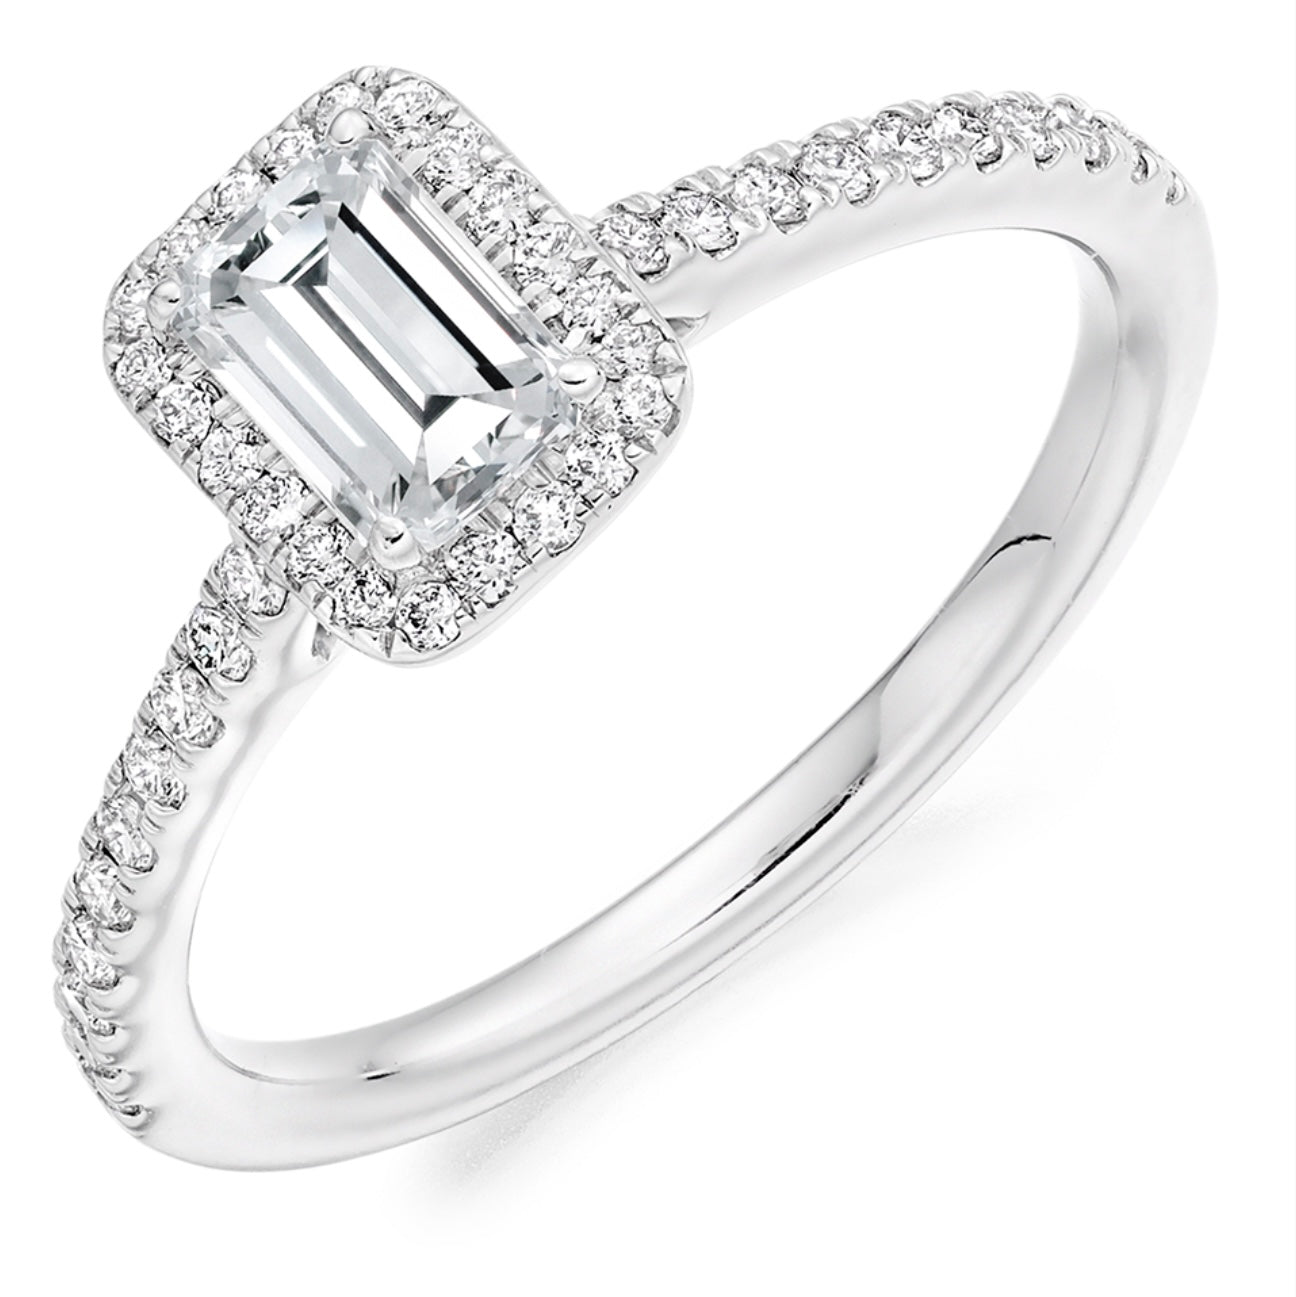 Platinum emerald cut diamond halo ring with diamond shoulders